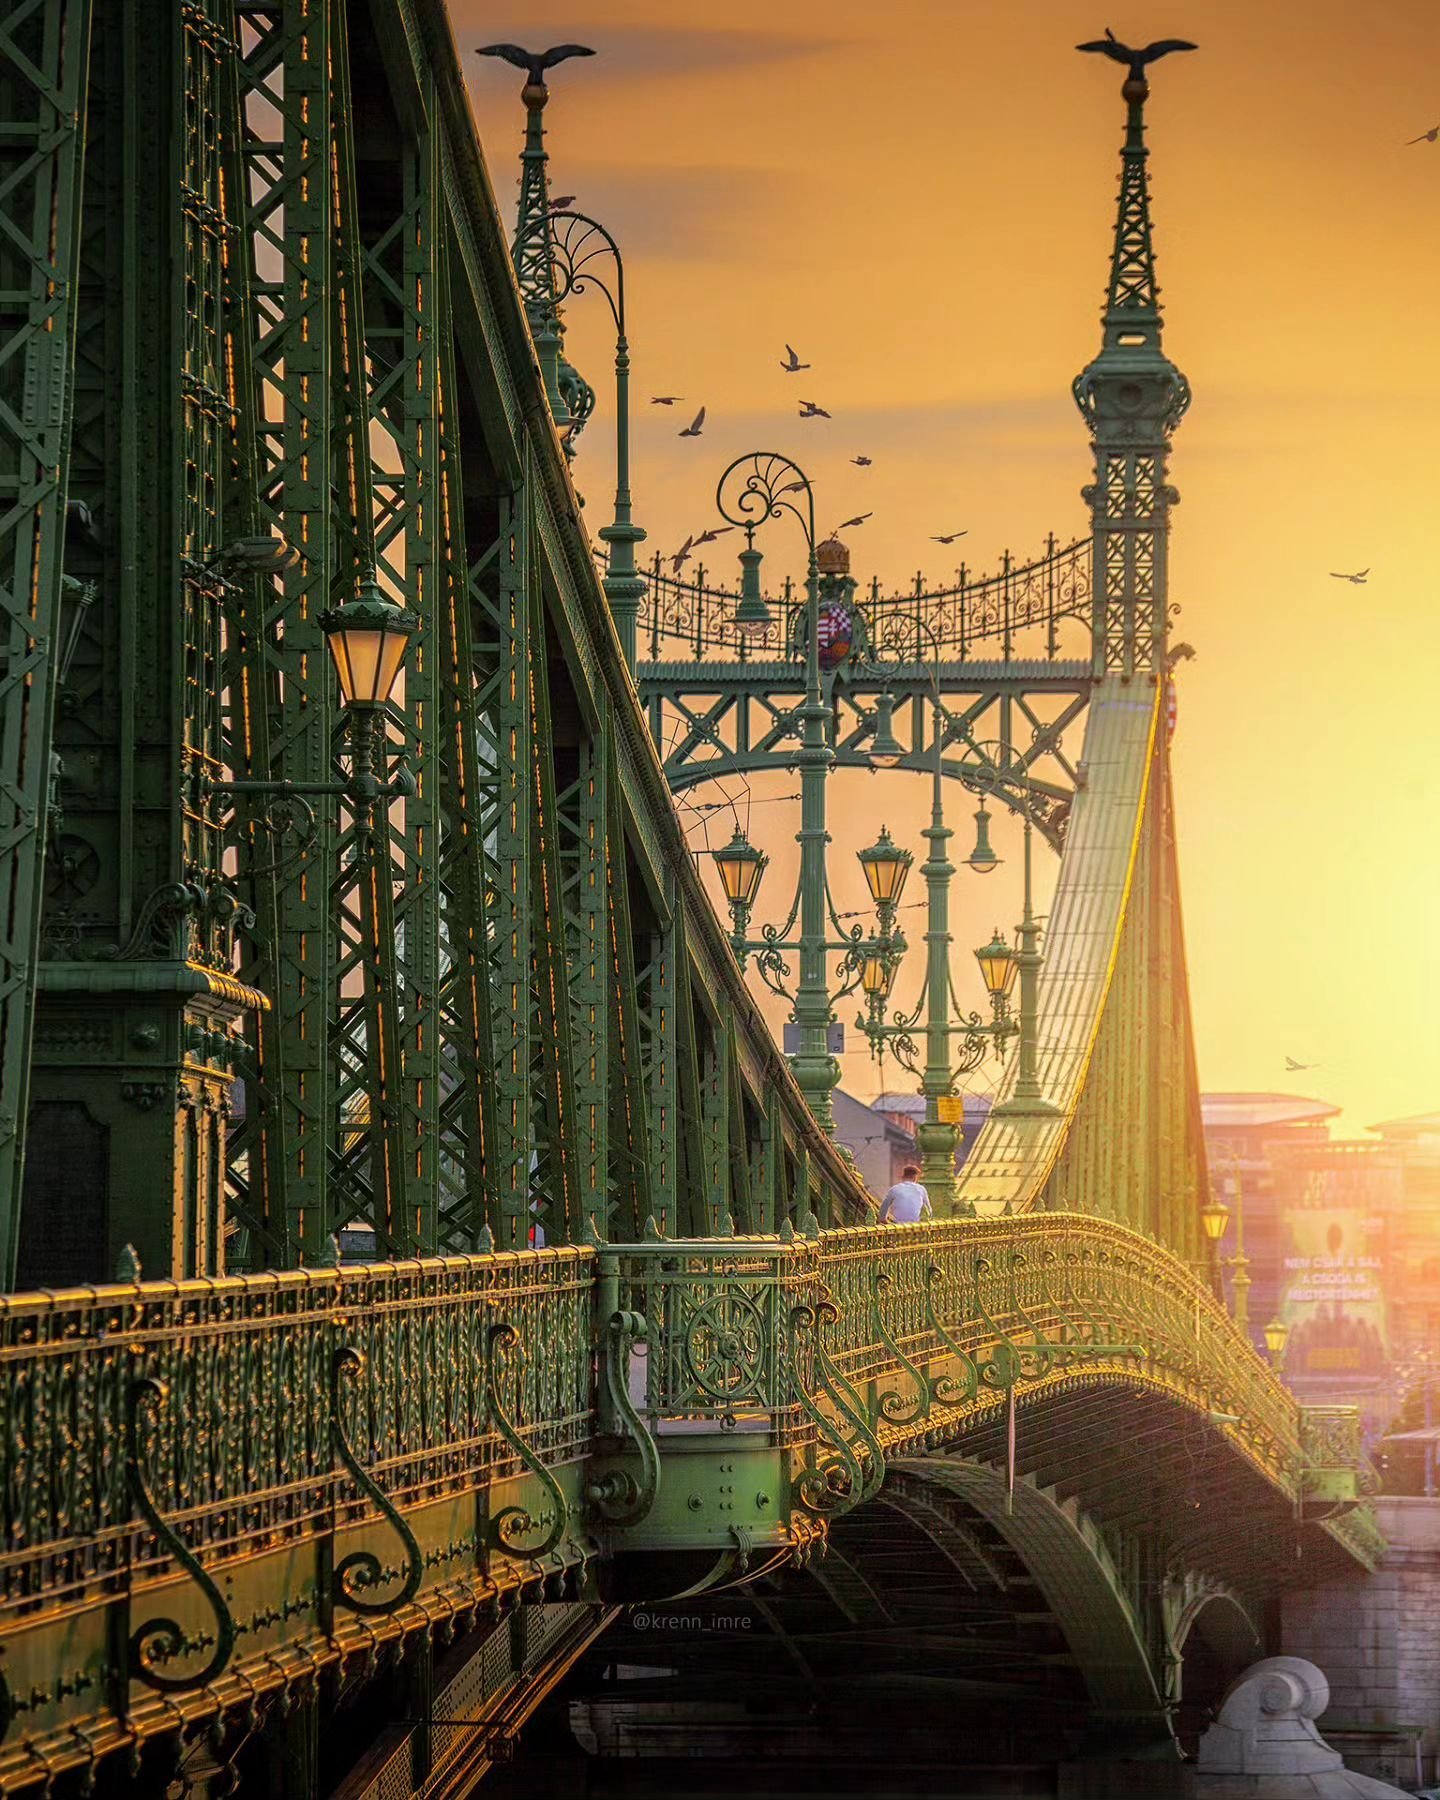 1440x1800, 491 Kb / Мост, Будапешт, птицы, Венгрия, Liberty Bridge, мост свободы